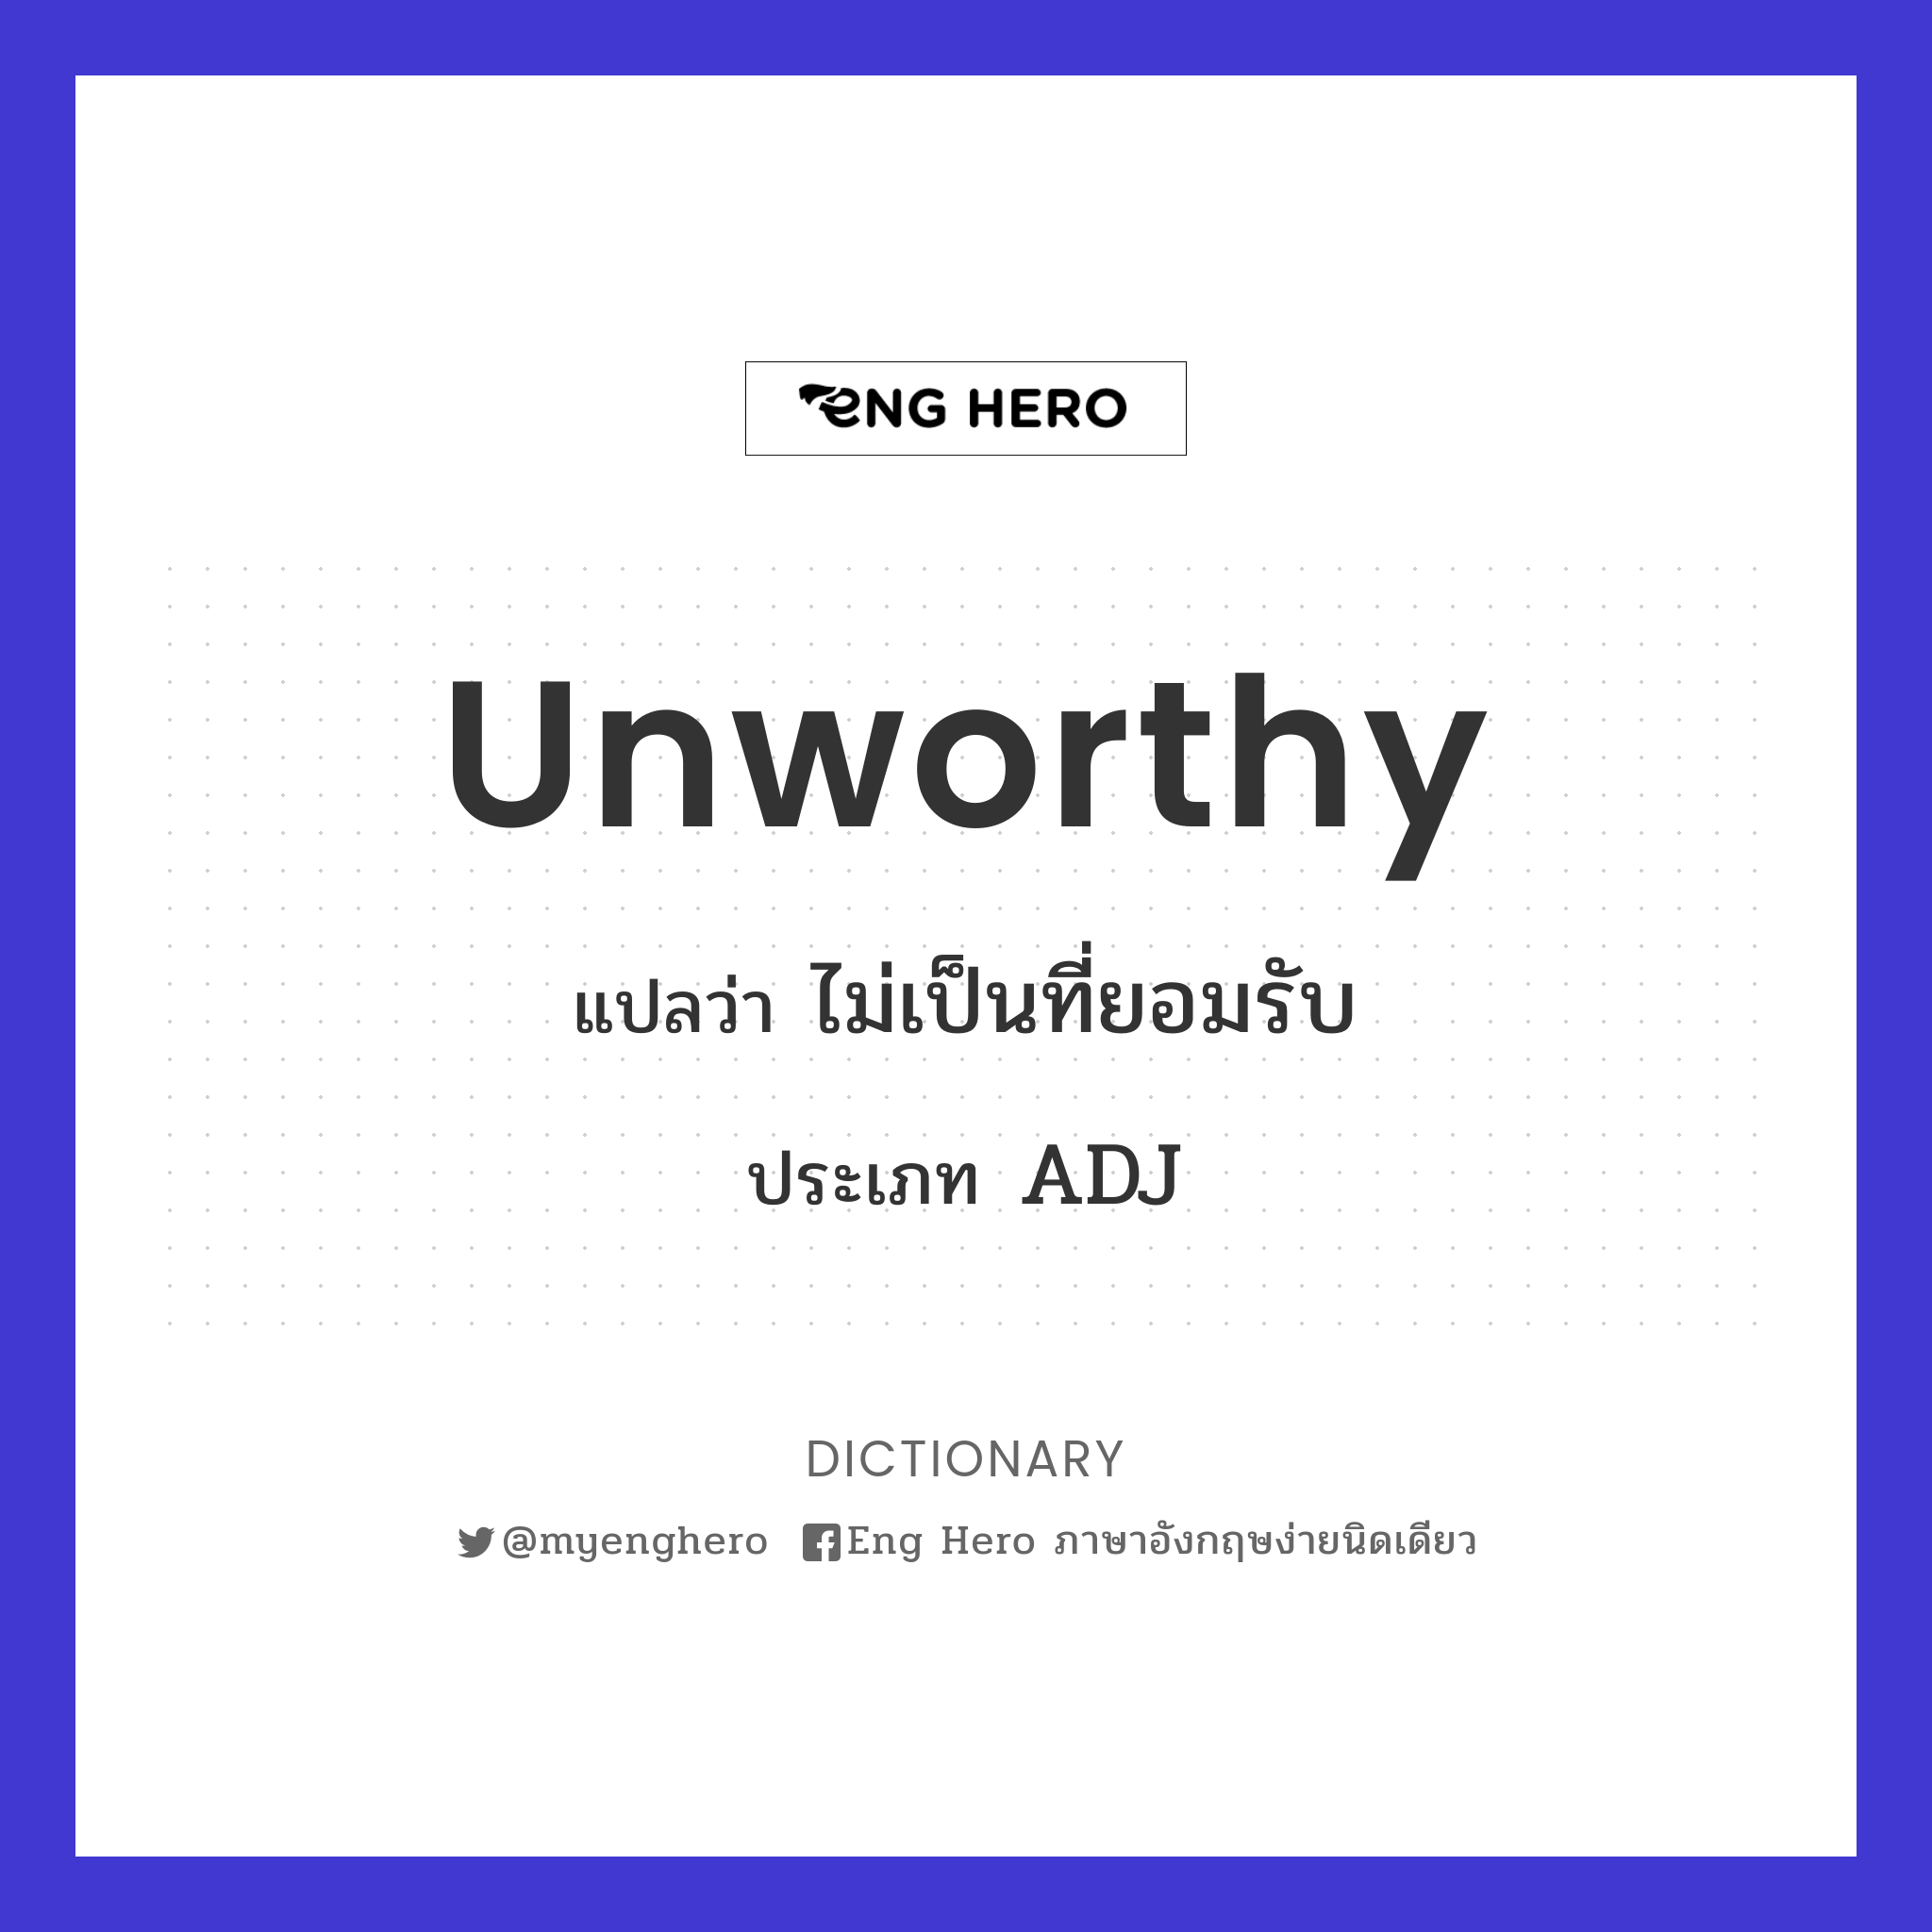 unworthy